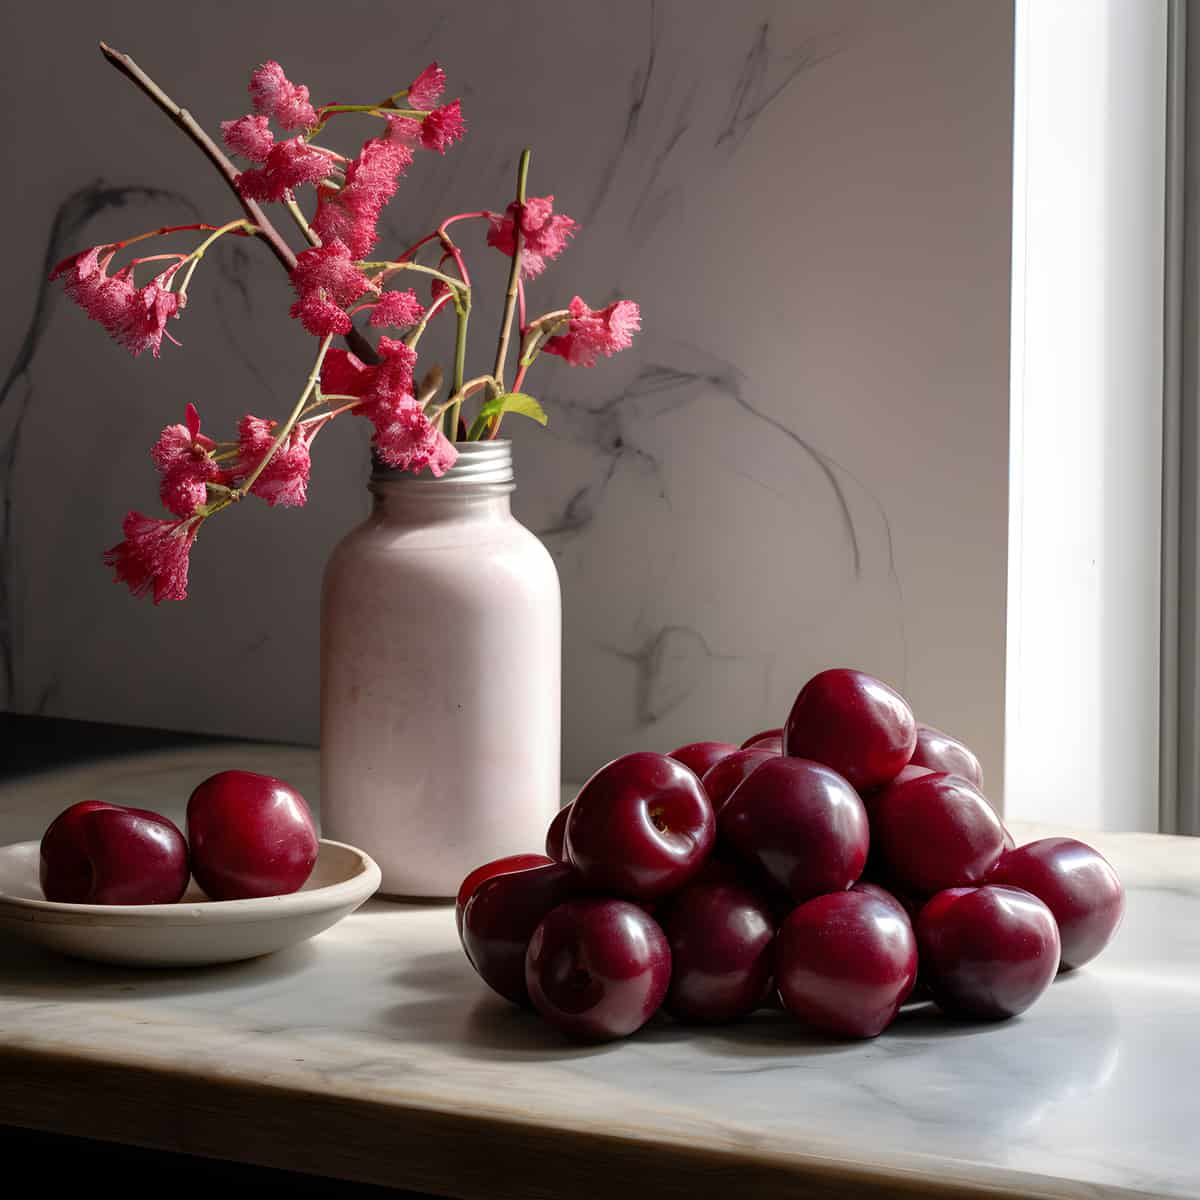 Cherry Plum on a kitchen counter